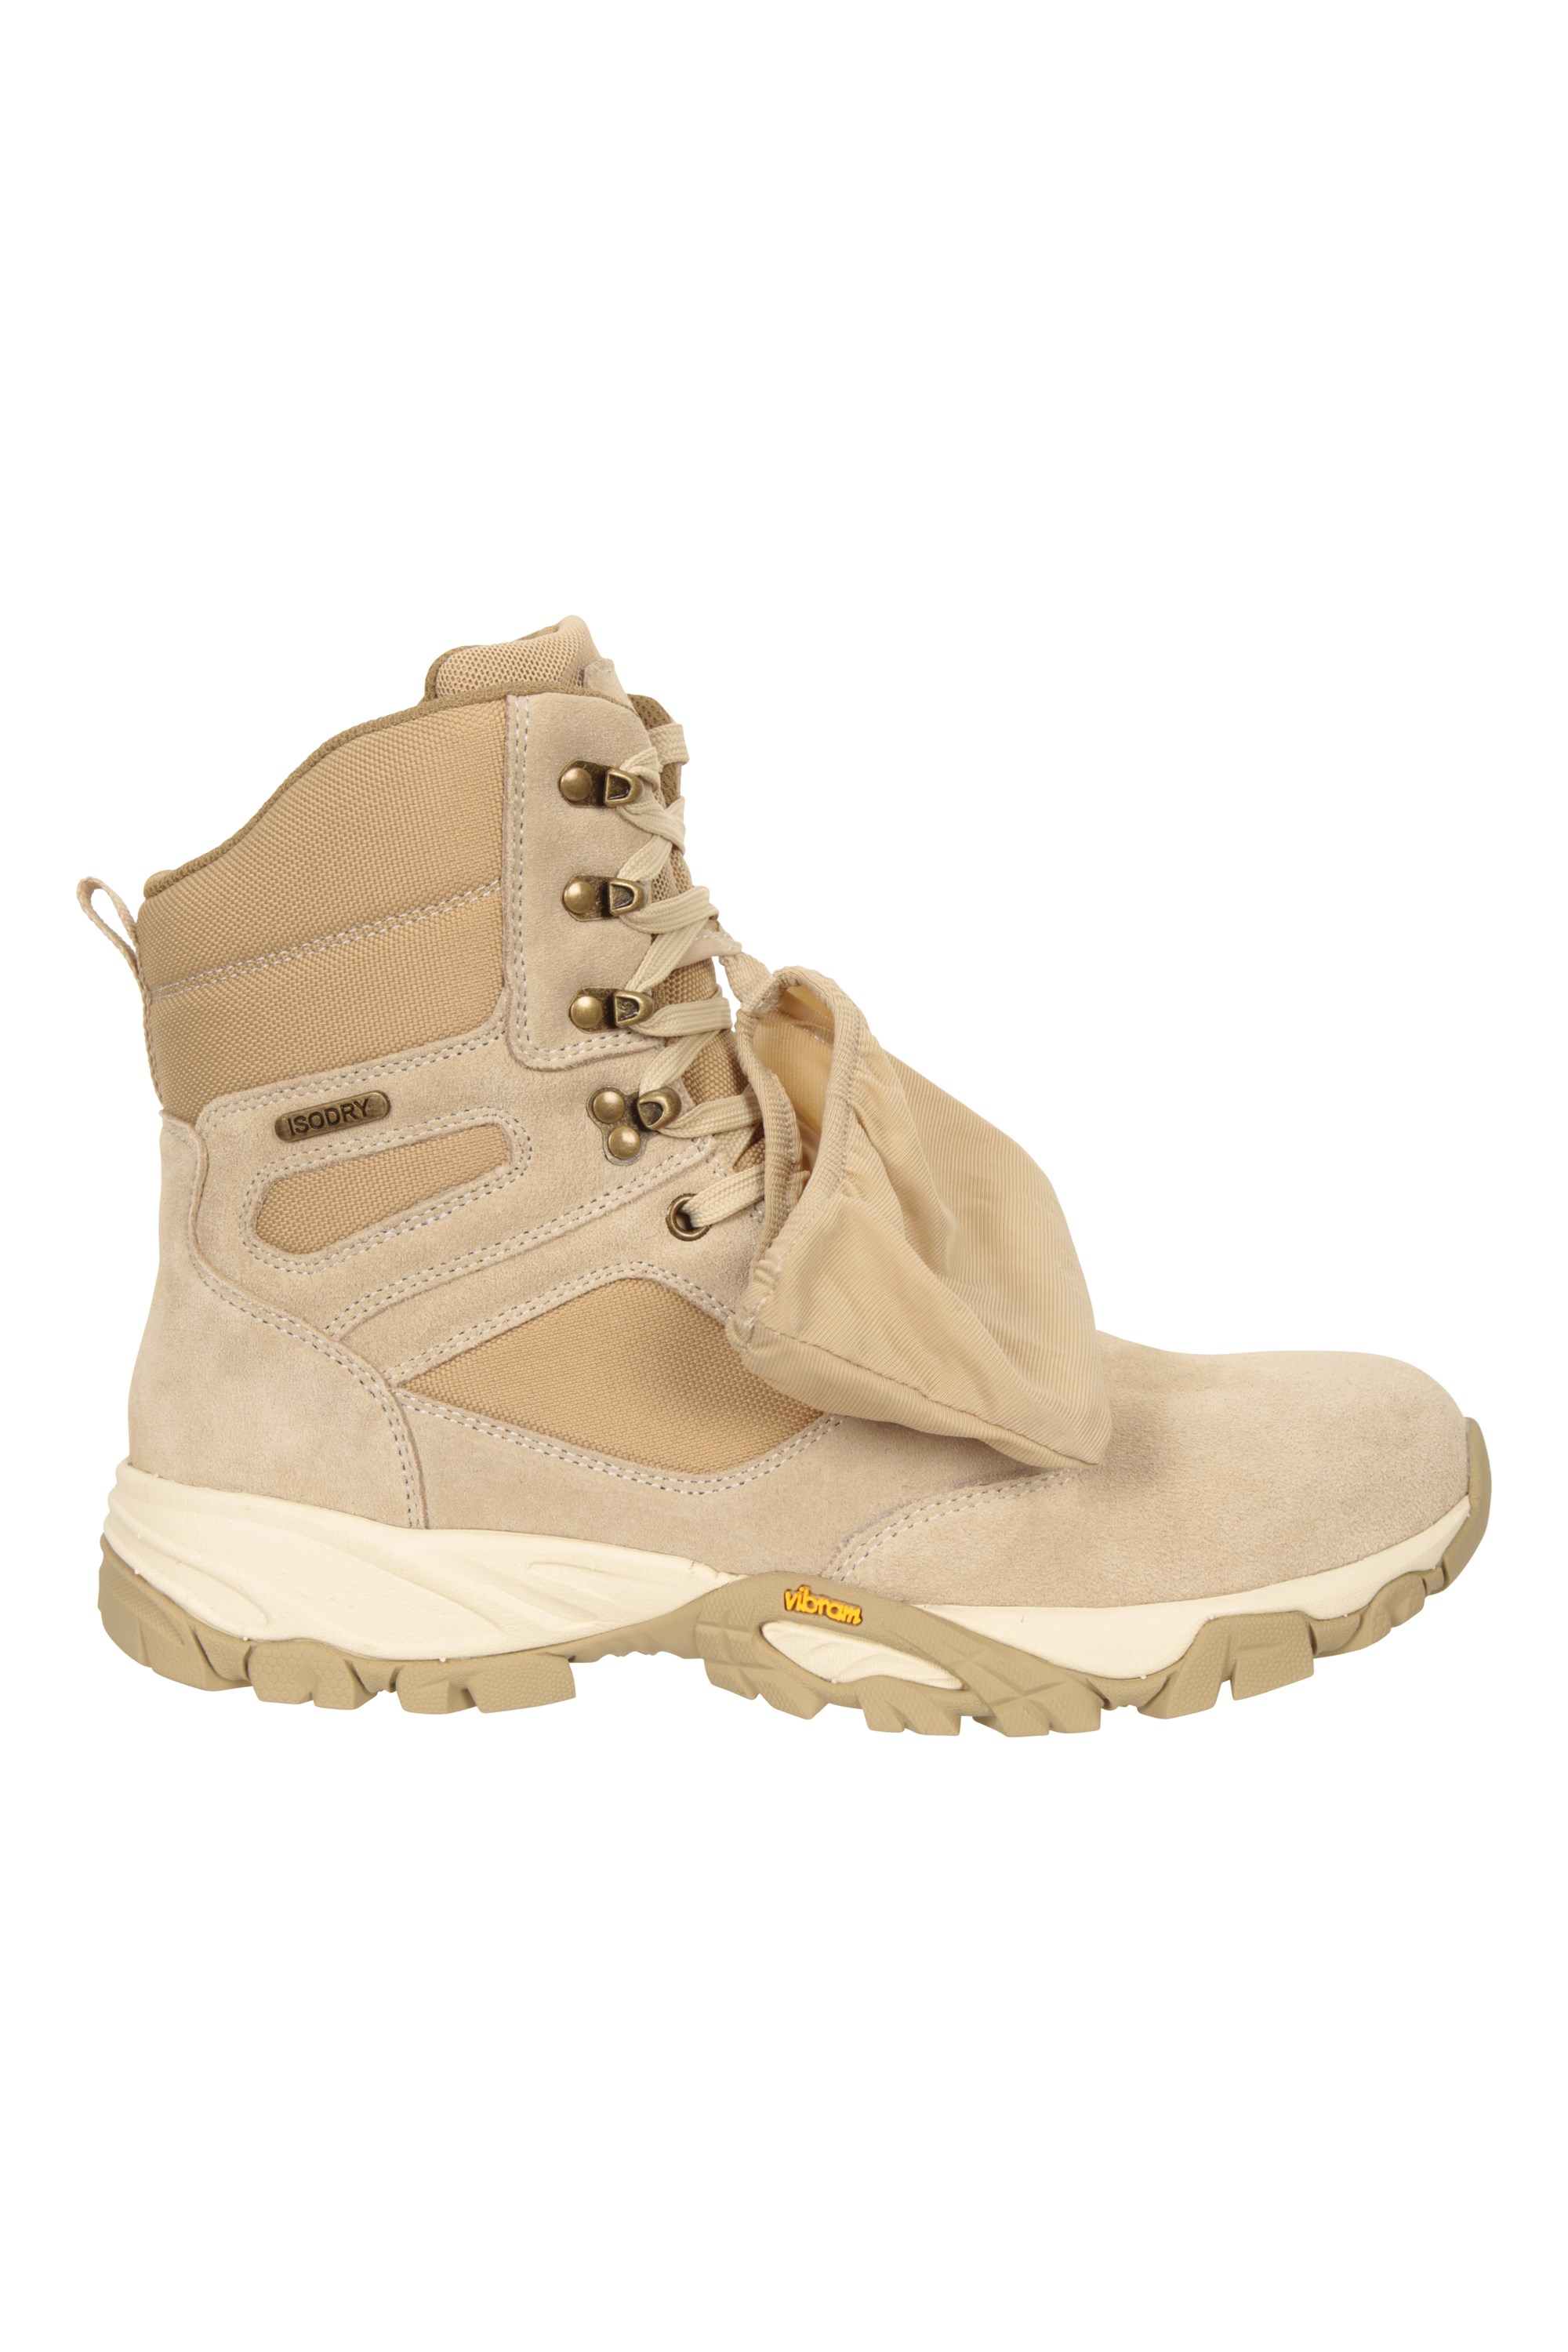 Mountain Warehouse Mountain Warehouse Dunes Extreme Men's Boots Comfortable Fit Vibram Desert Shoes 